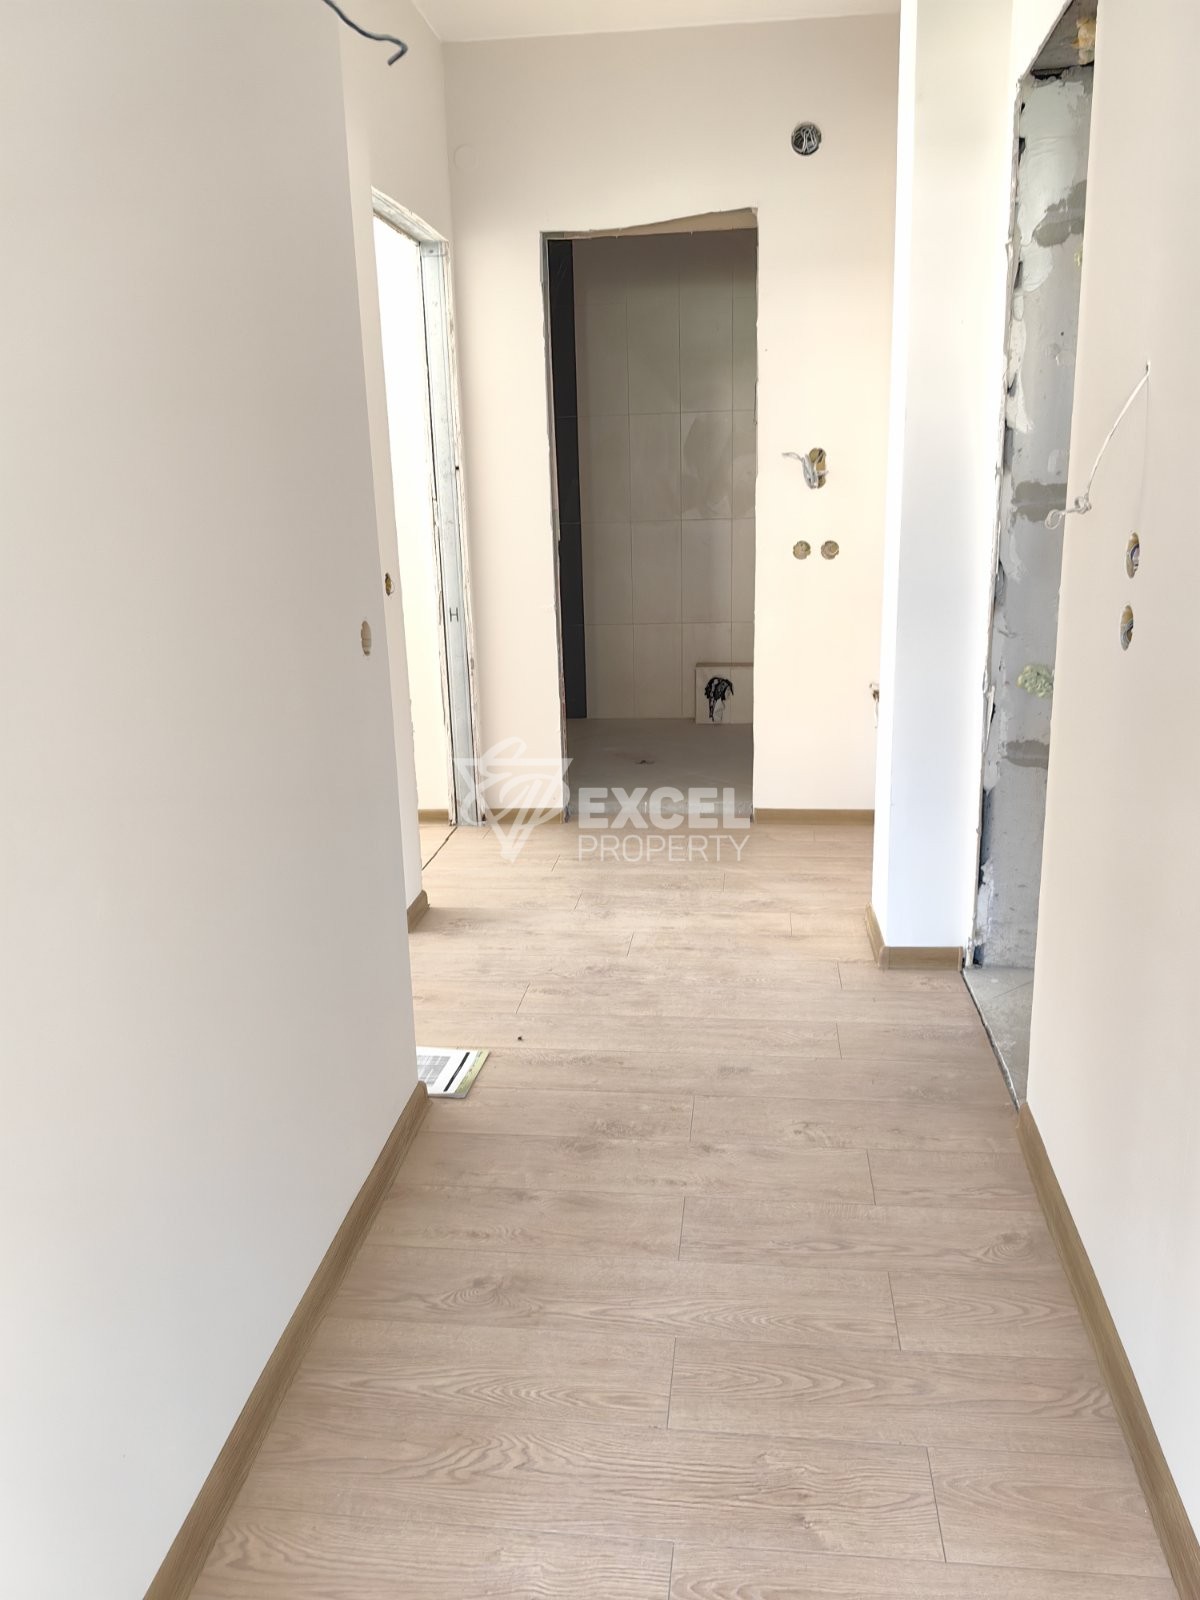 Тристаен апартамент за продажба в нова жилищна сграда, Банско